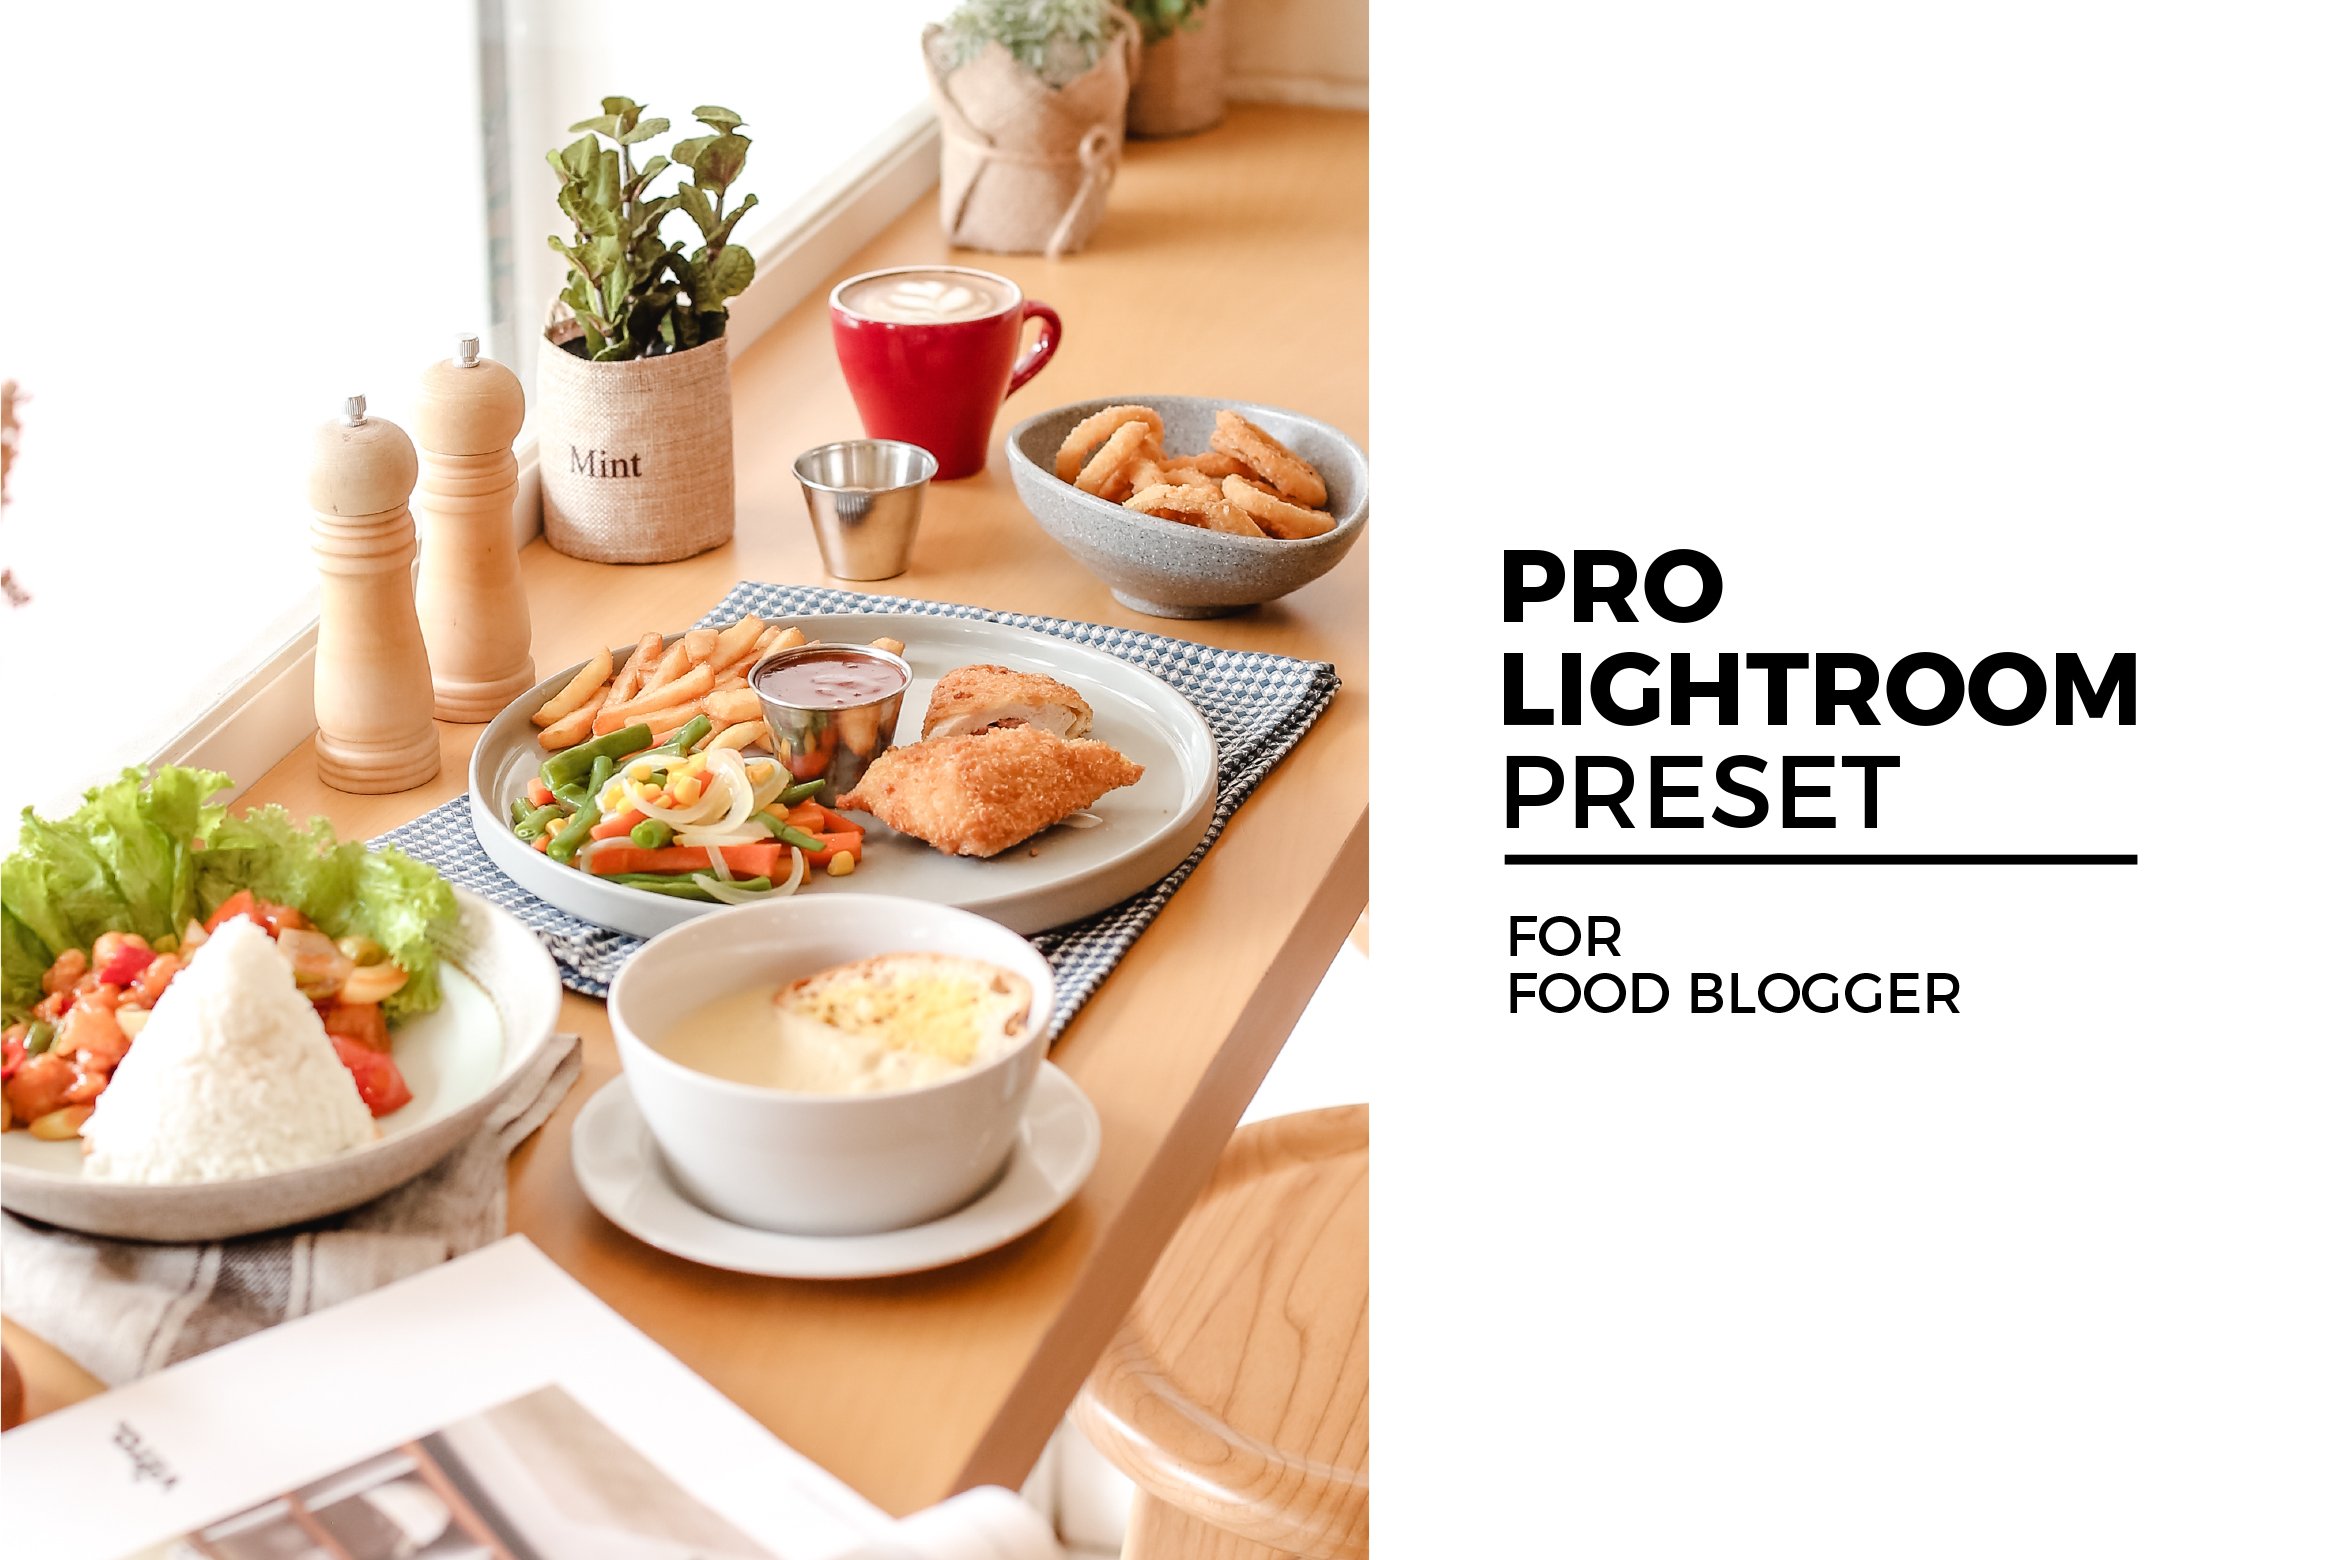 Lightroom Preset for Food Bloggercover image.